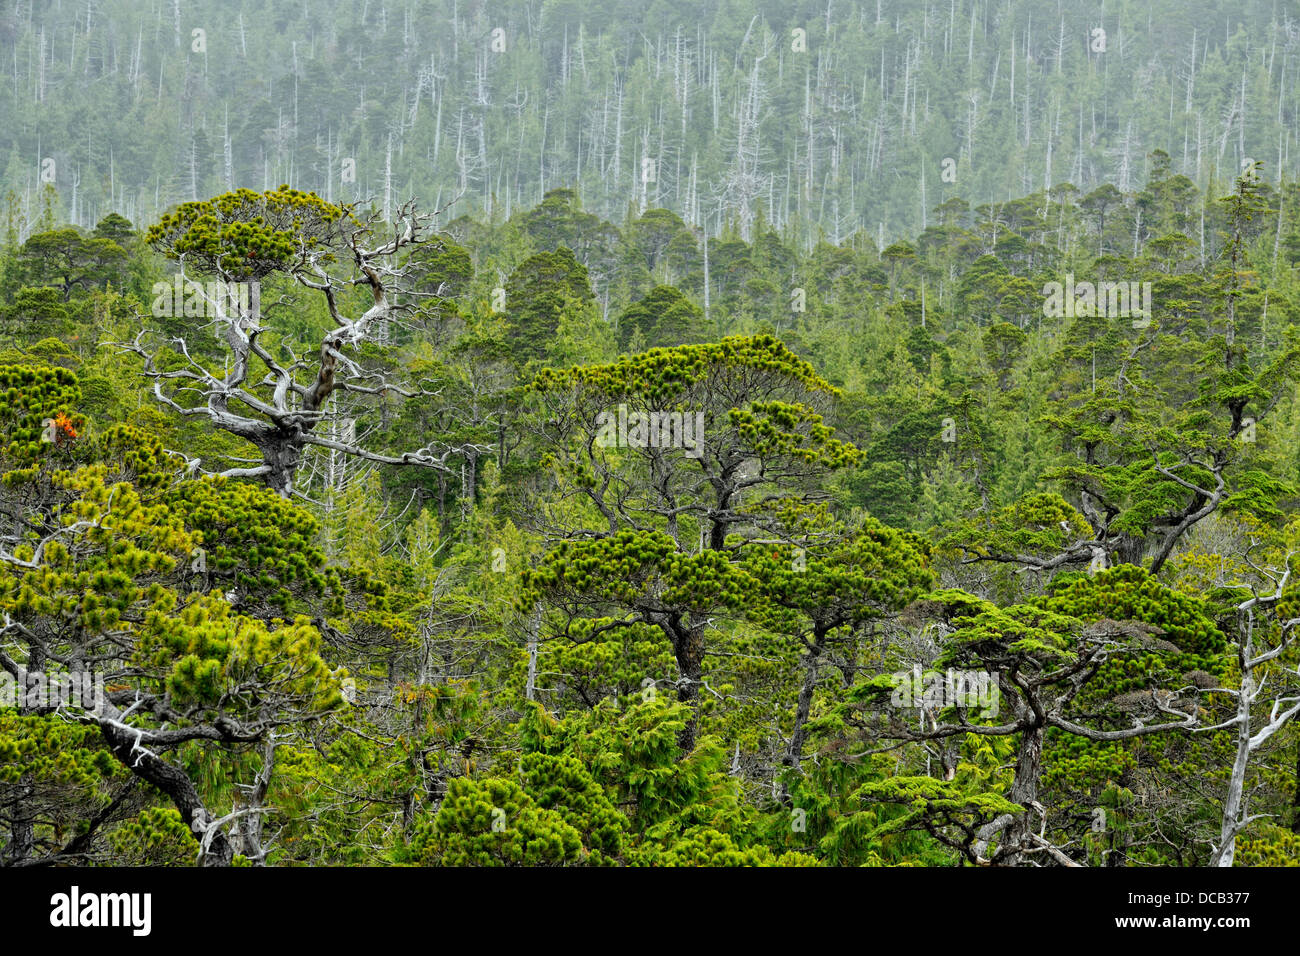 Stunted spruce trees Bonsai Forest Island Bay Haida Gwaii Queen Charlotte Islands Gwaii Haanas NP British Columbia Canada Stock Photo